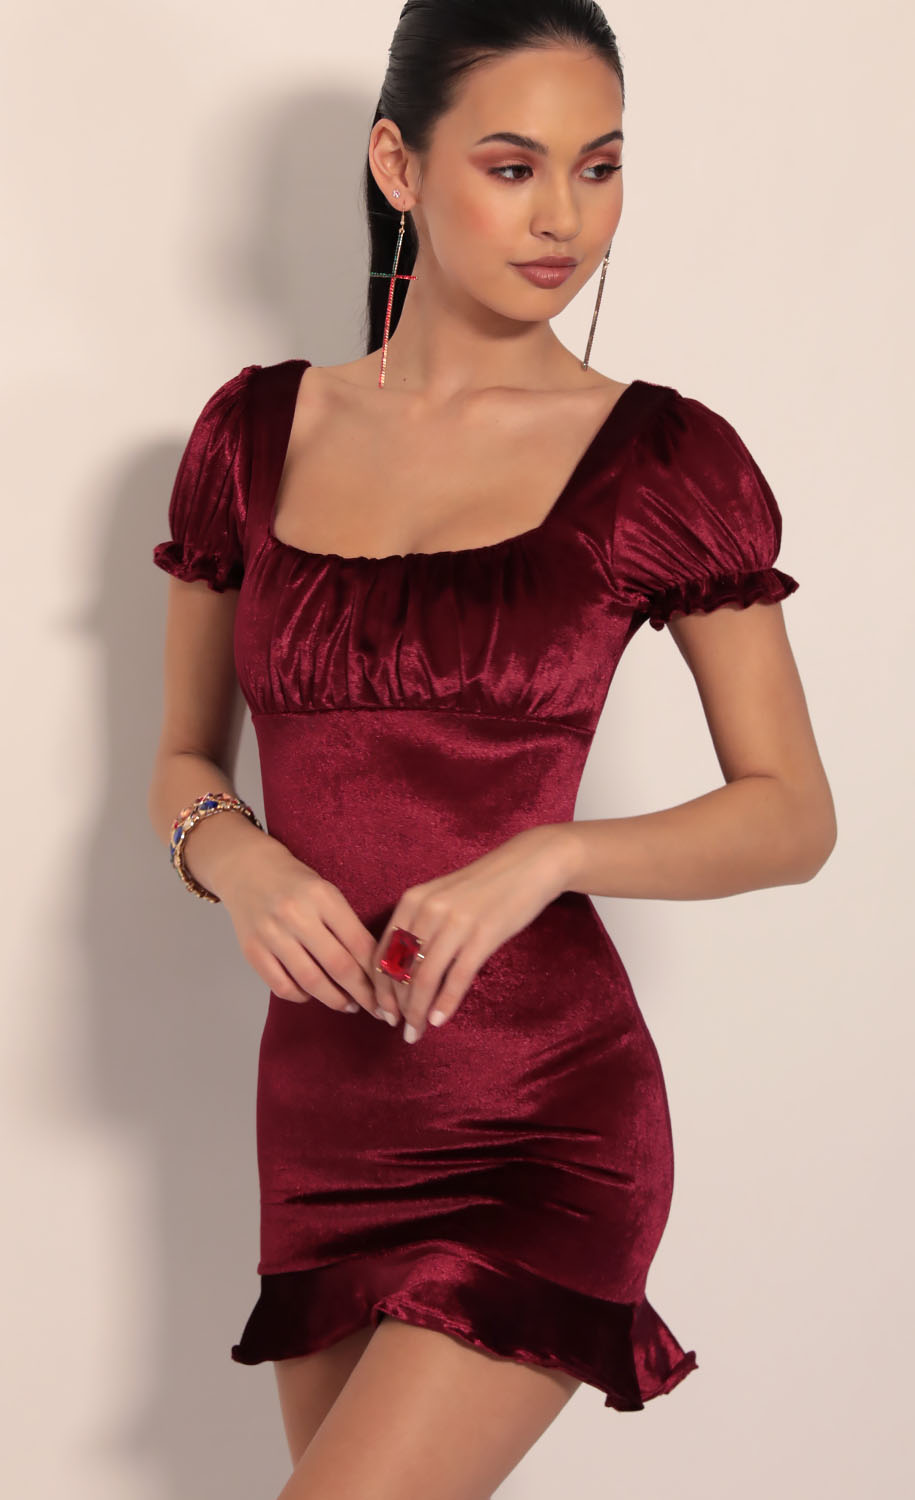 burgundy dress